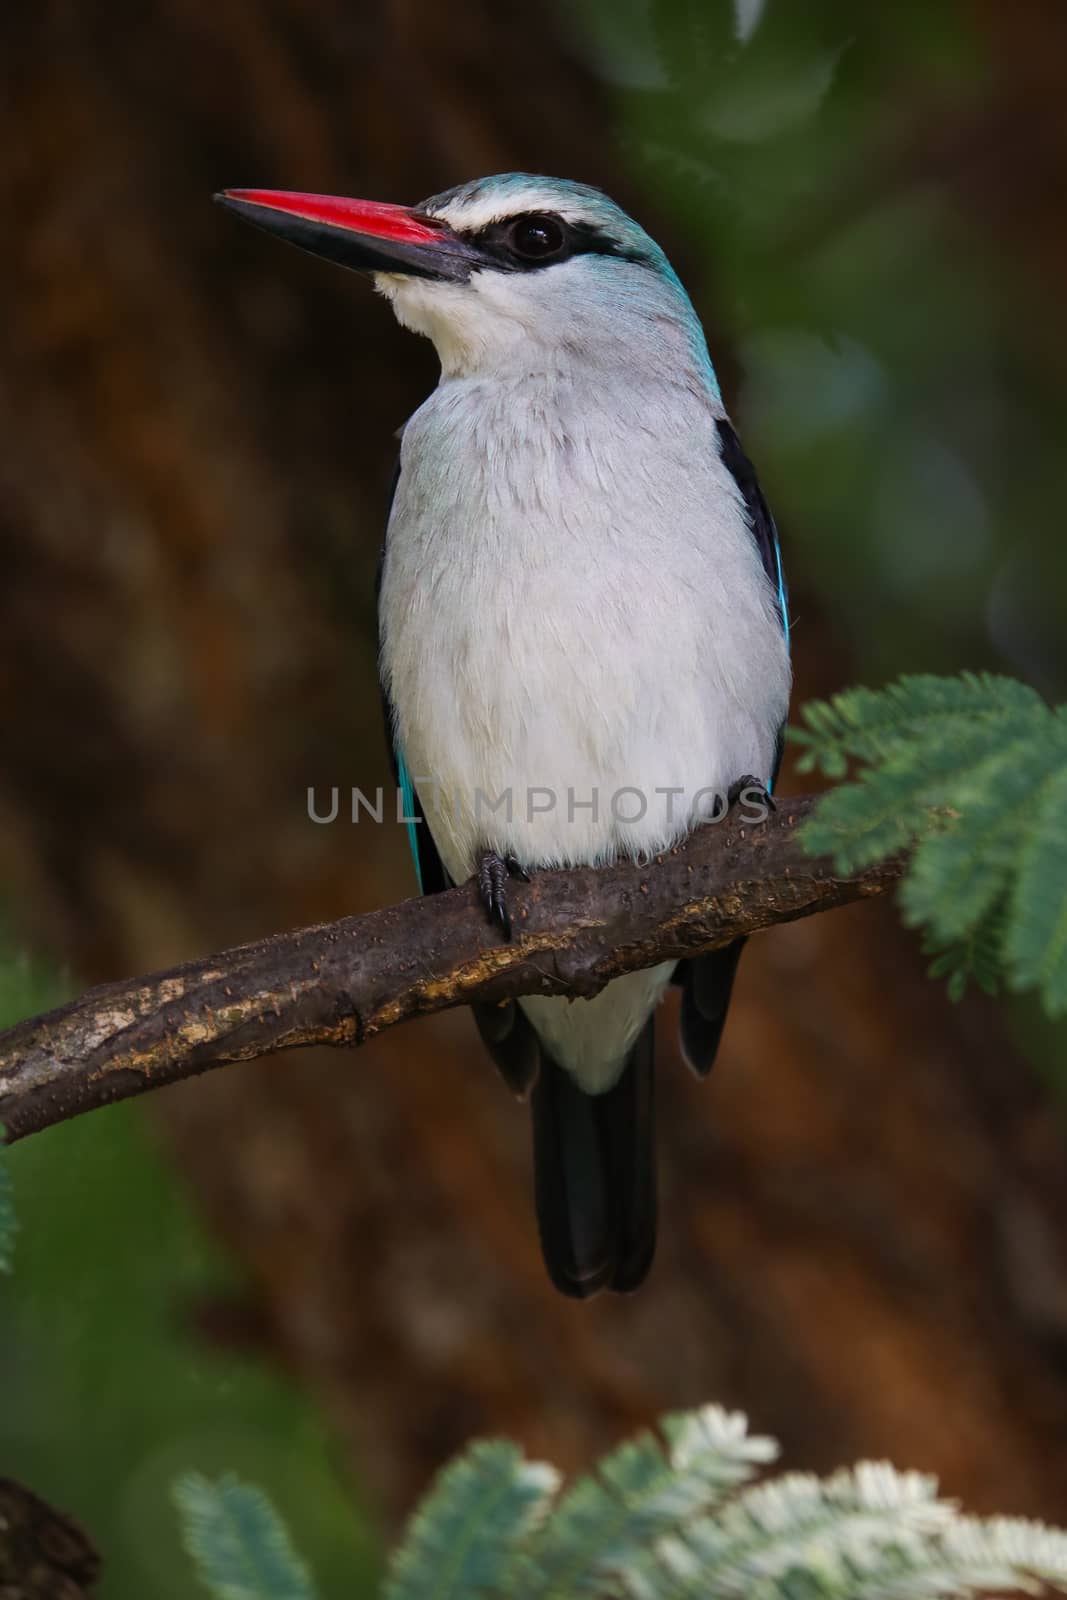 Woodland Kingfisher Perched On Tree Branch (Halcyon senegalensis) by jjvanginkel